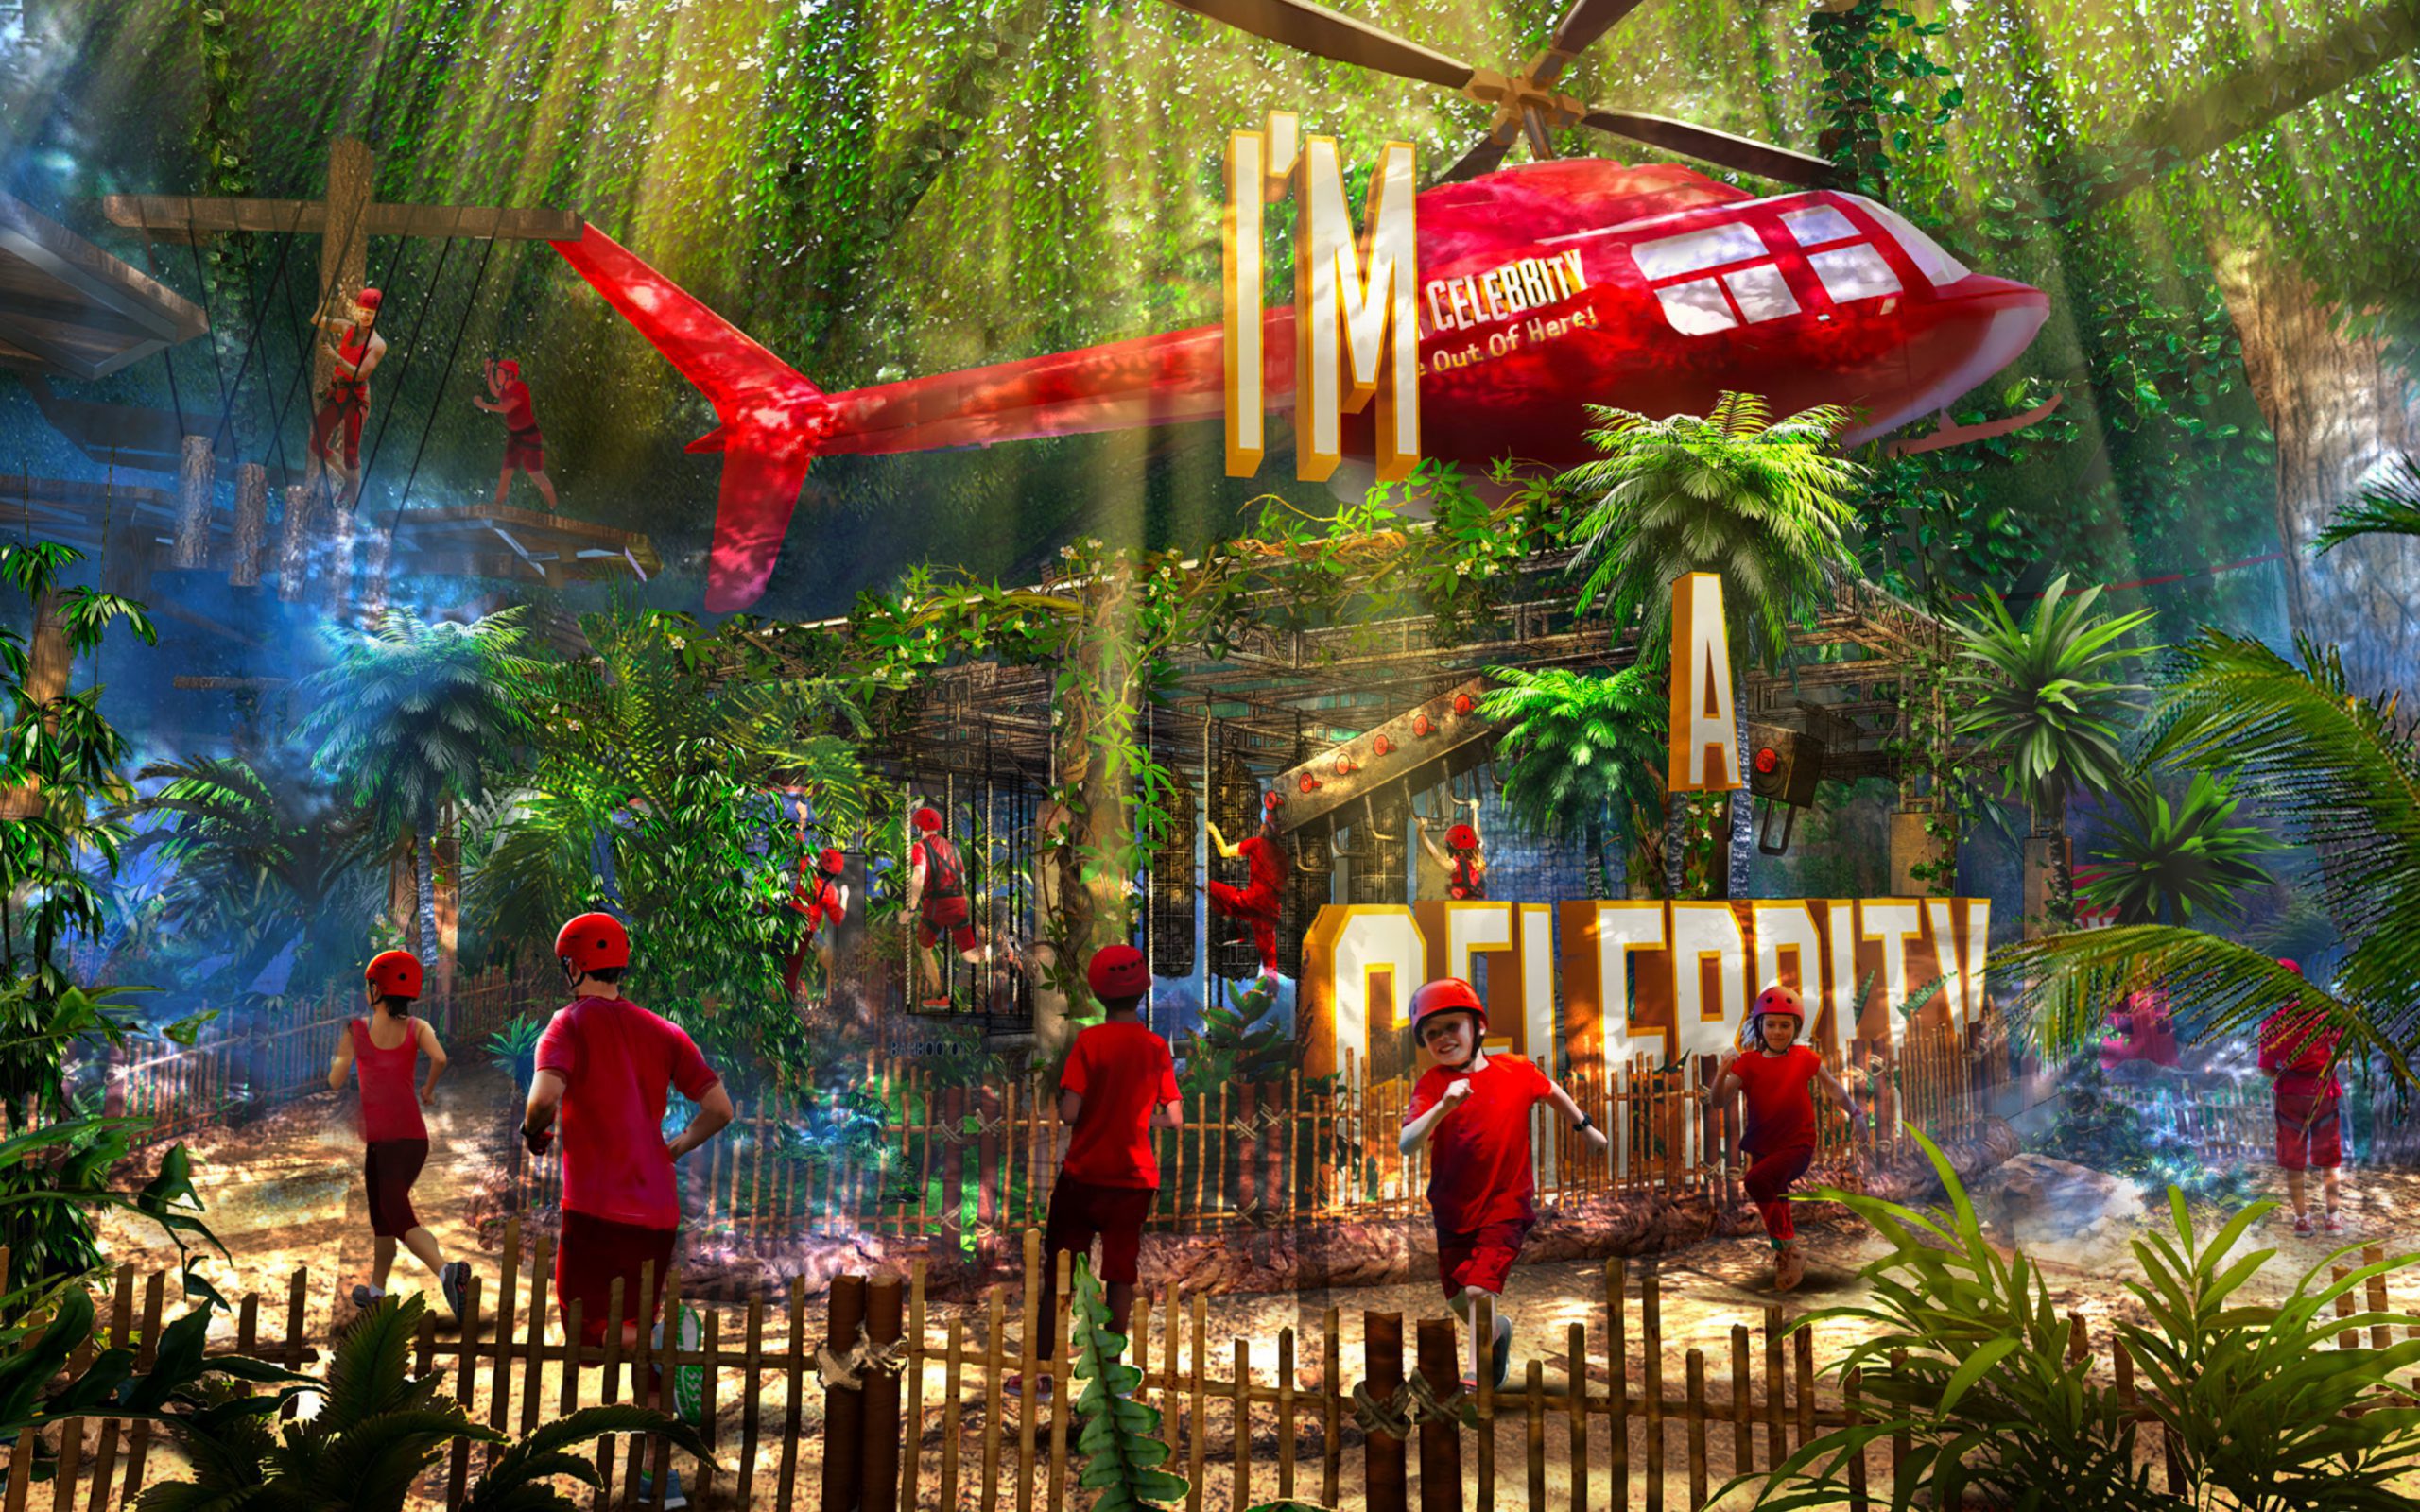 Concept image of inside the I'm a celebrity jungle challenge